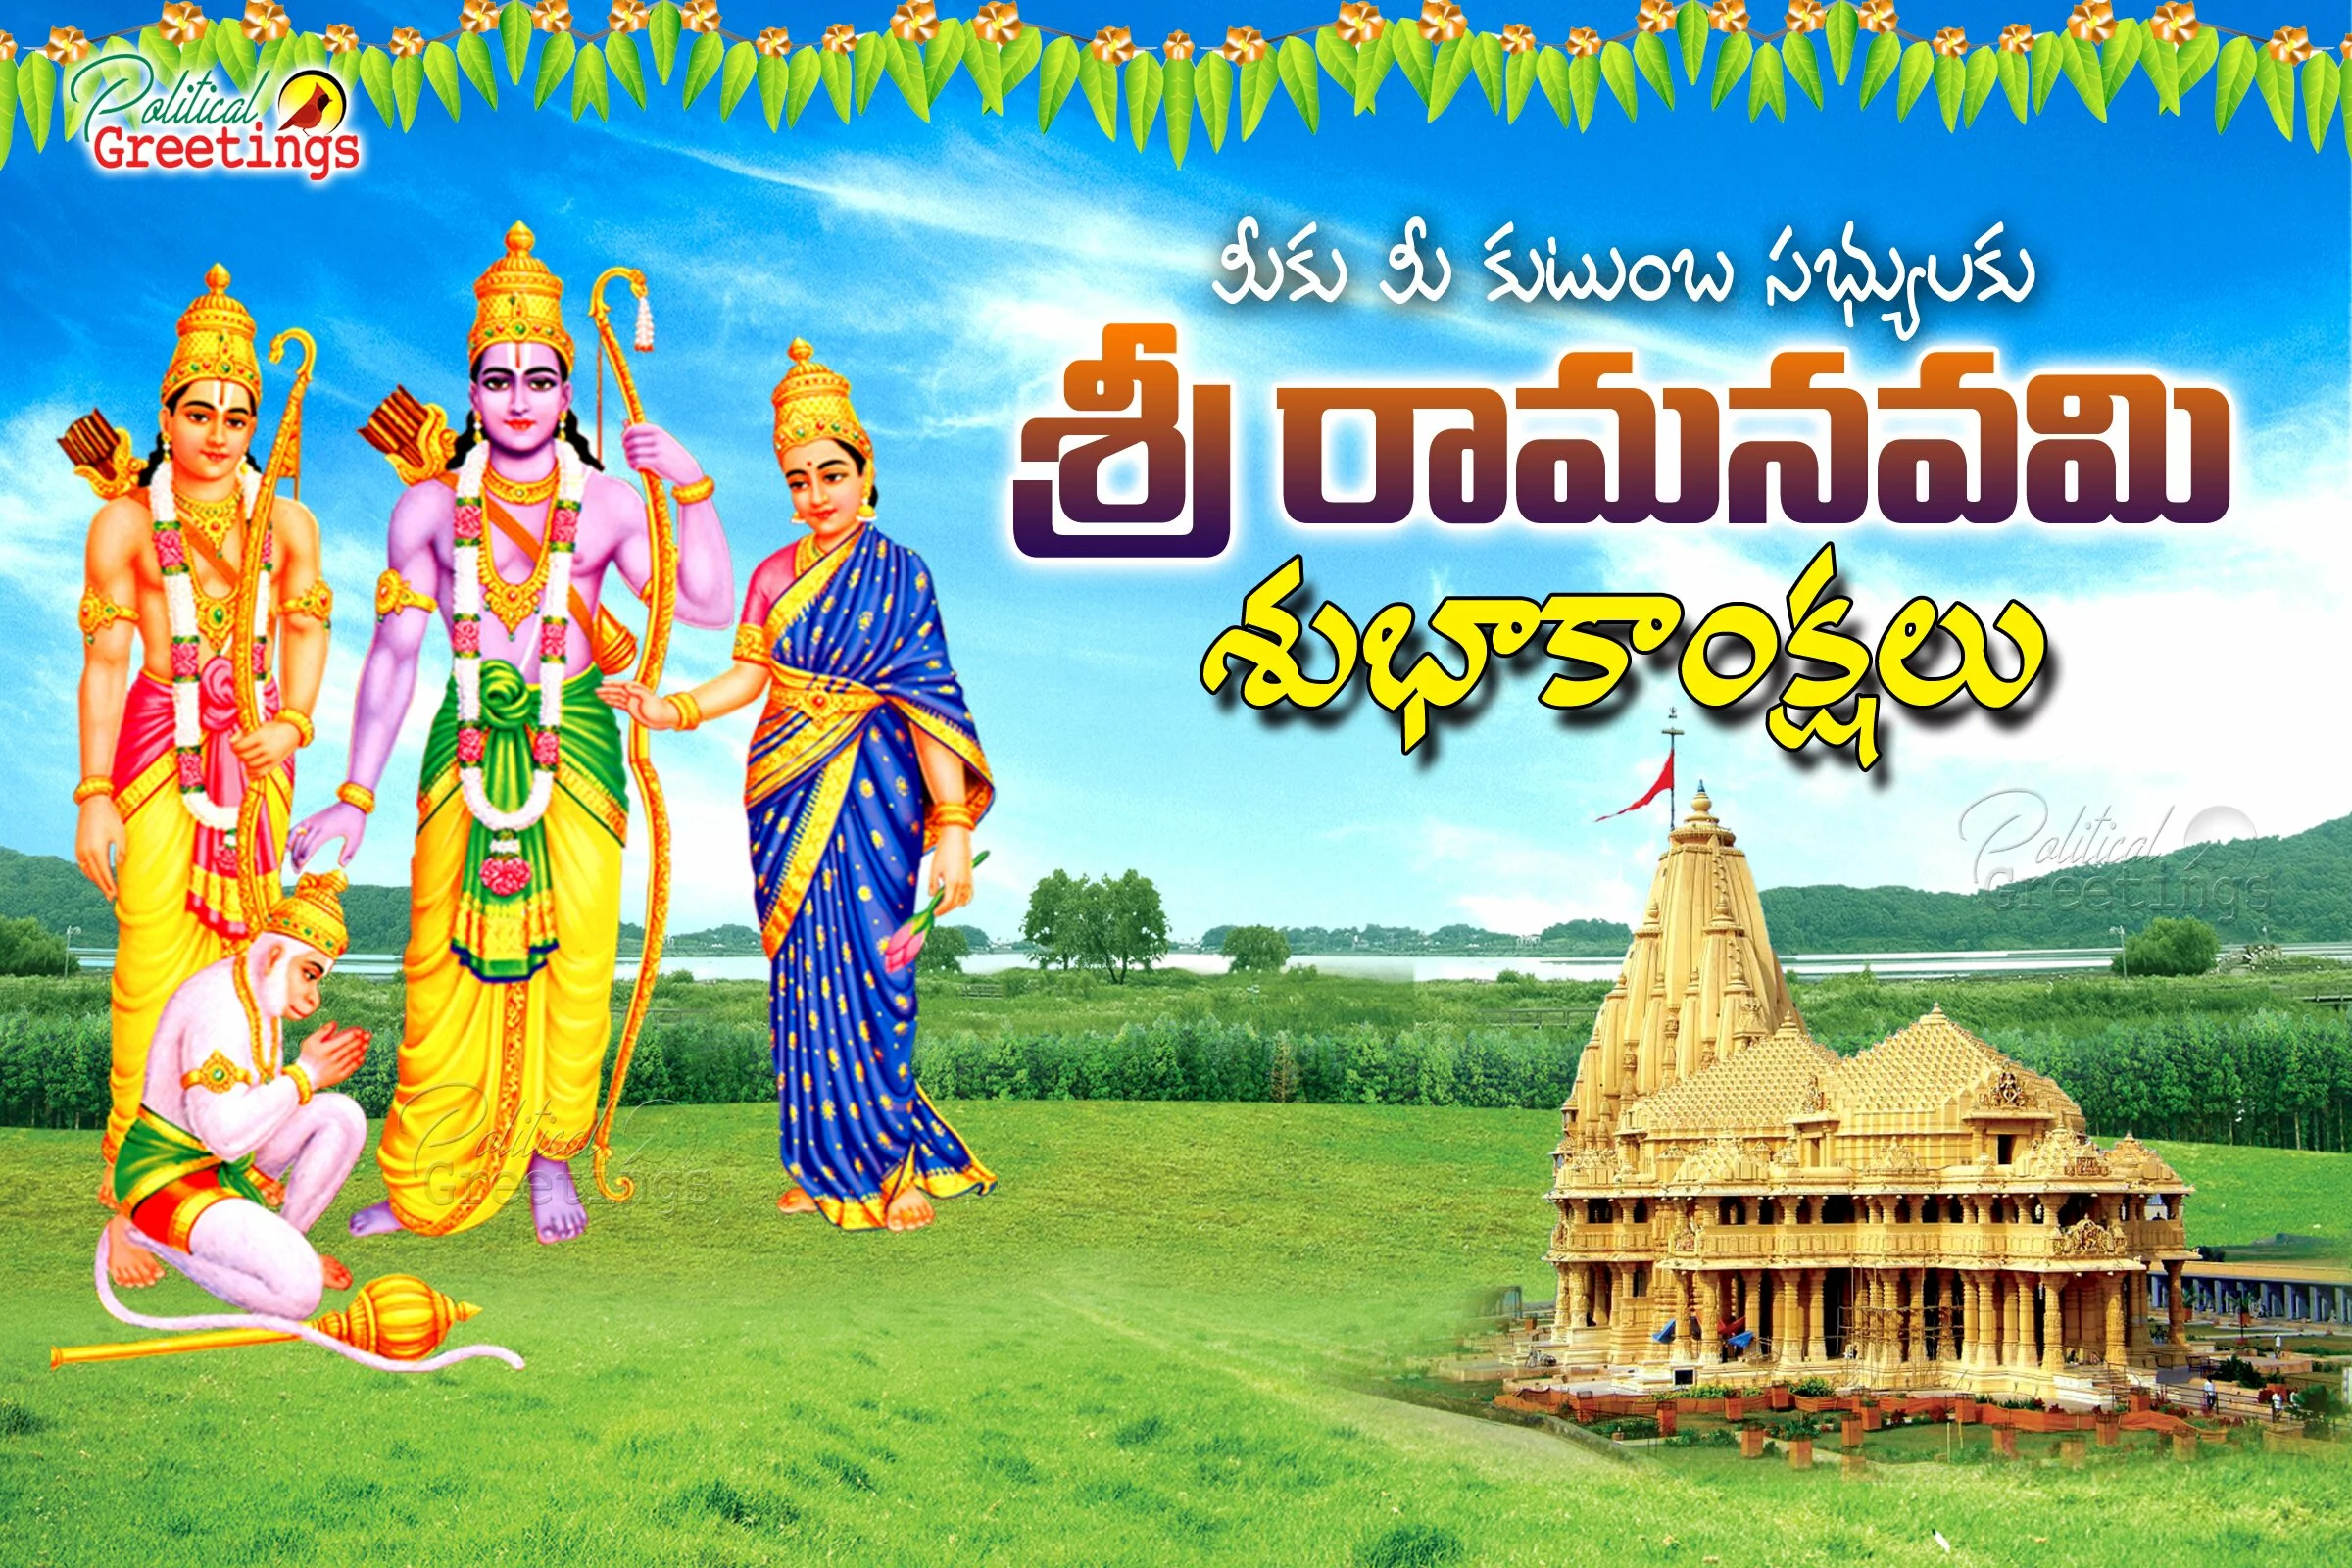 Sri Ramanavam 2017 Greetings with Lord Rama and Seetha Hd Wallpapers Free Download in Telugu